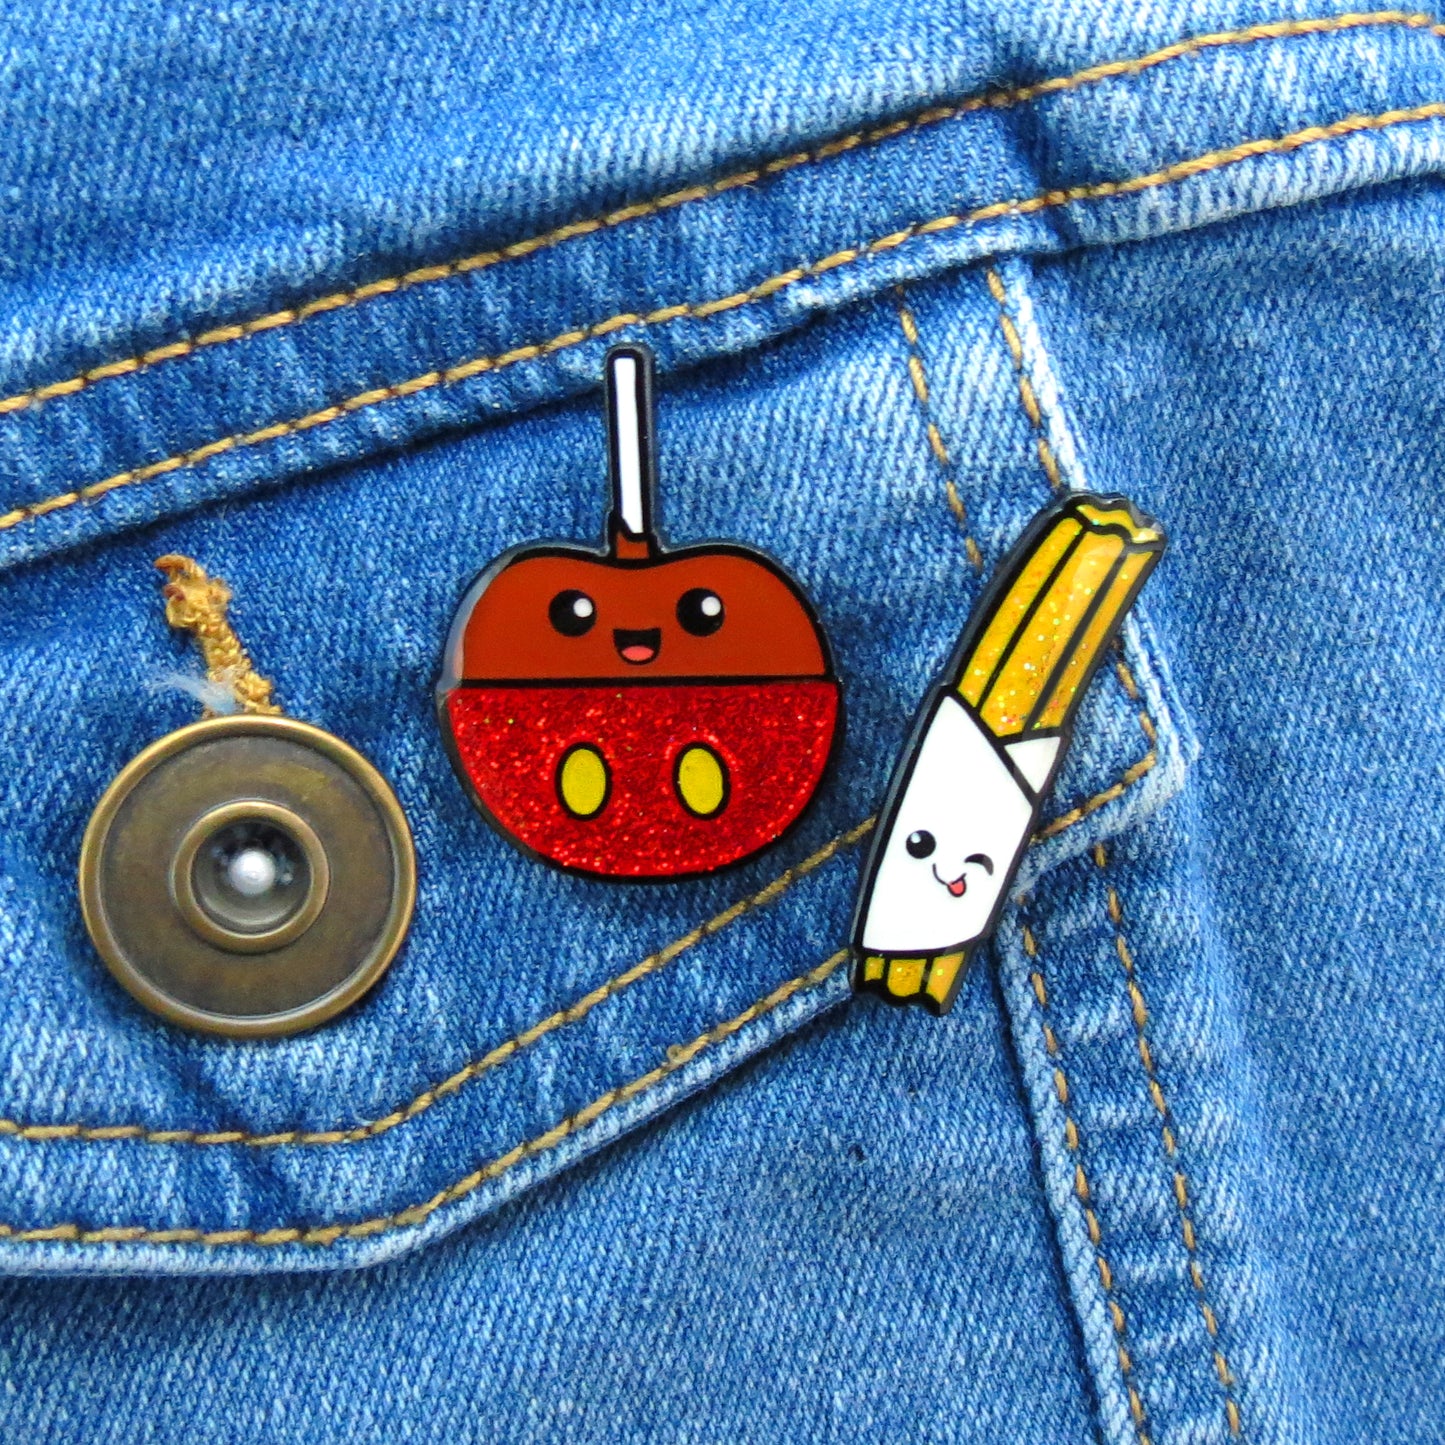 Caramel Apple and Churro enamel pin set on jean jacket pocket